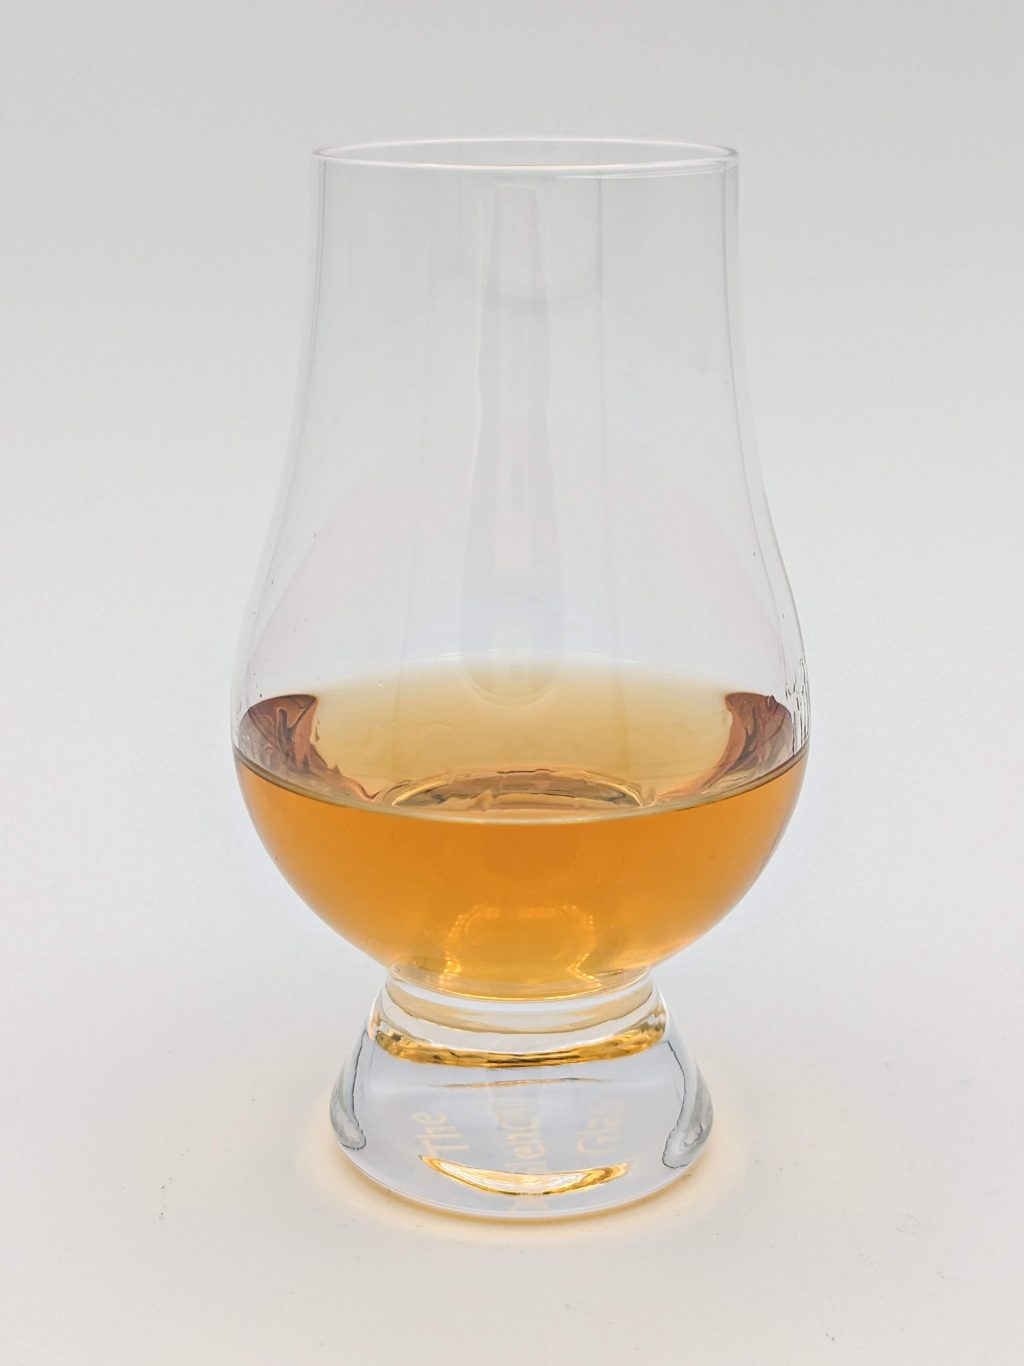 Gold Liquid in a Glencairn glass